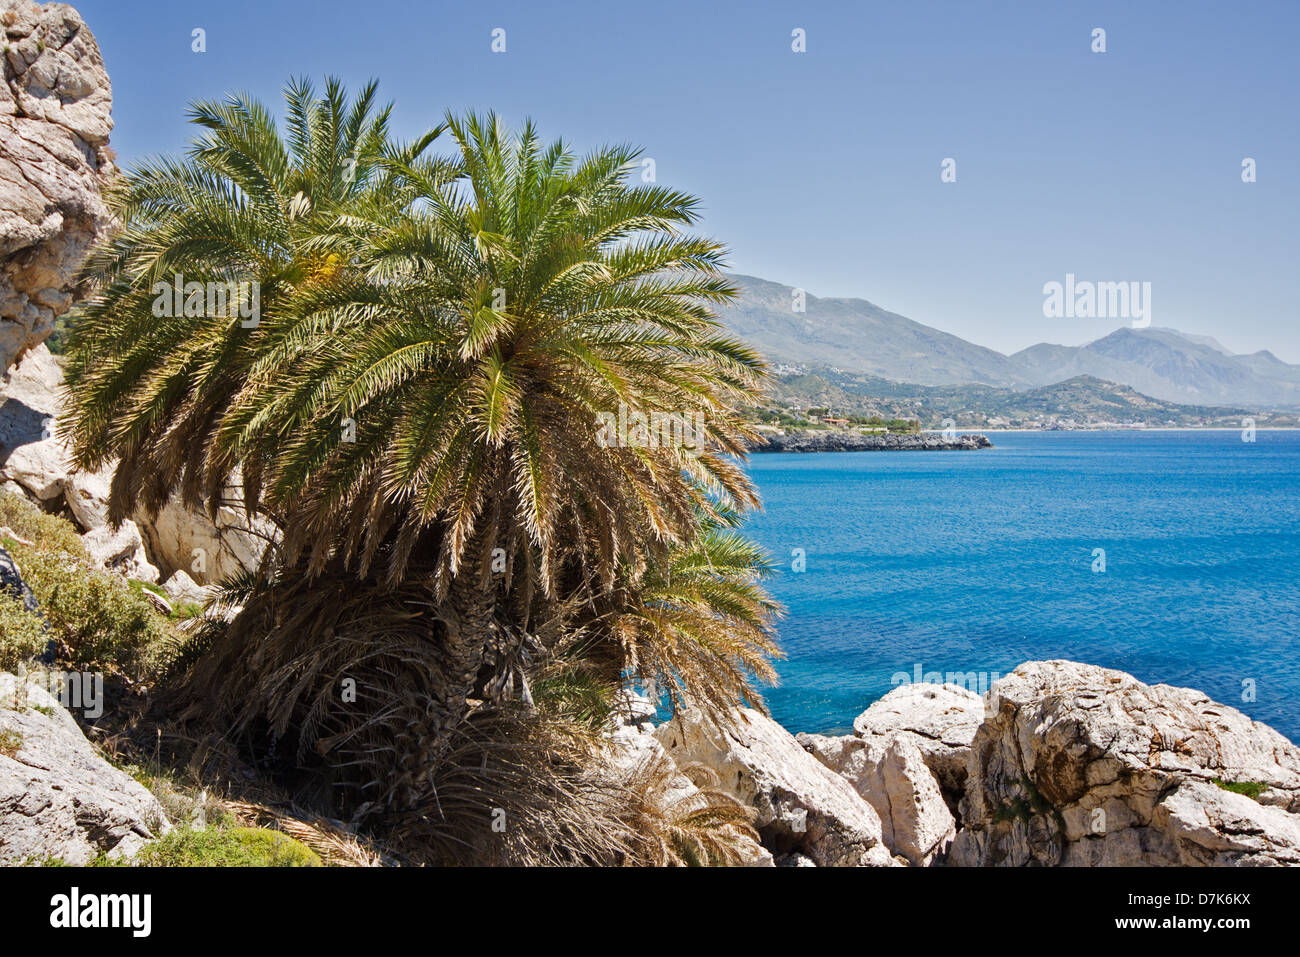 Cretan date palm on the coast of Crete near the blue Libyan sea Stock Photo